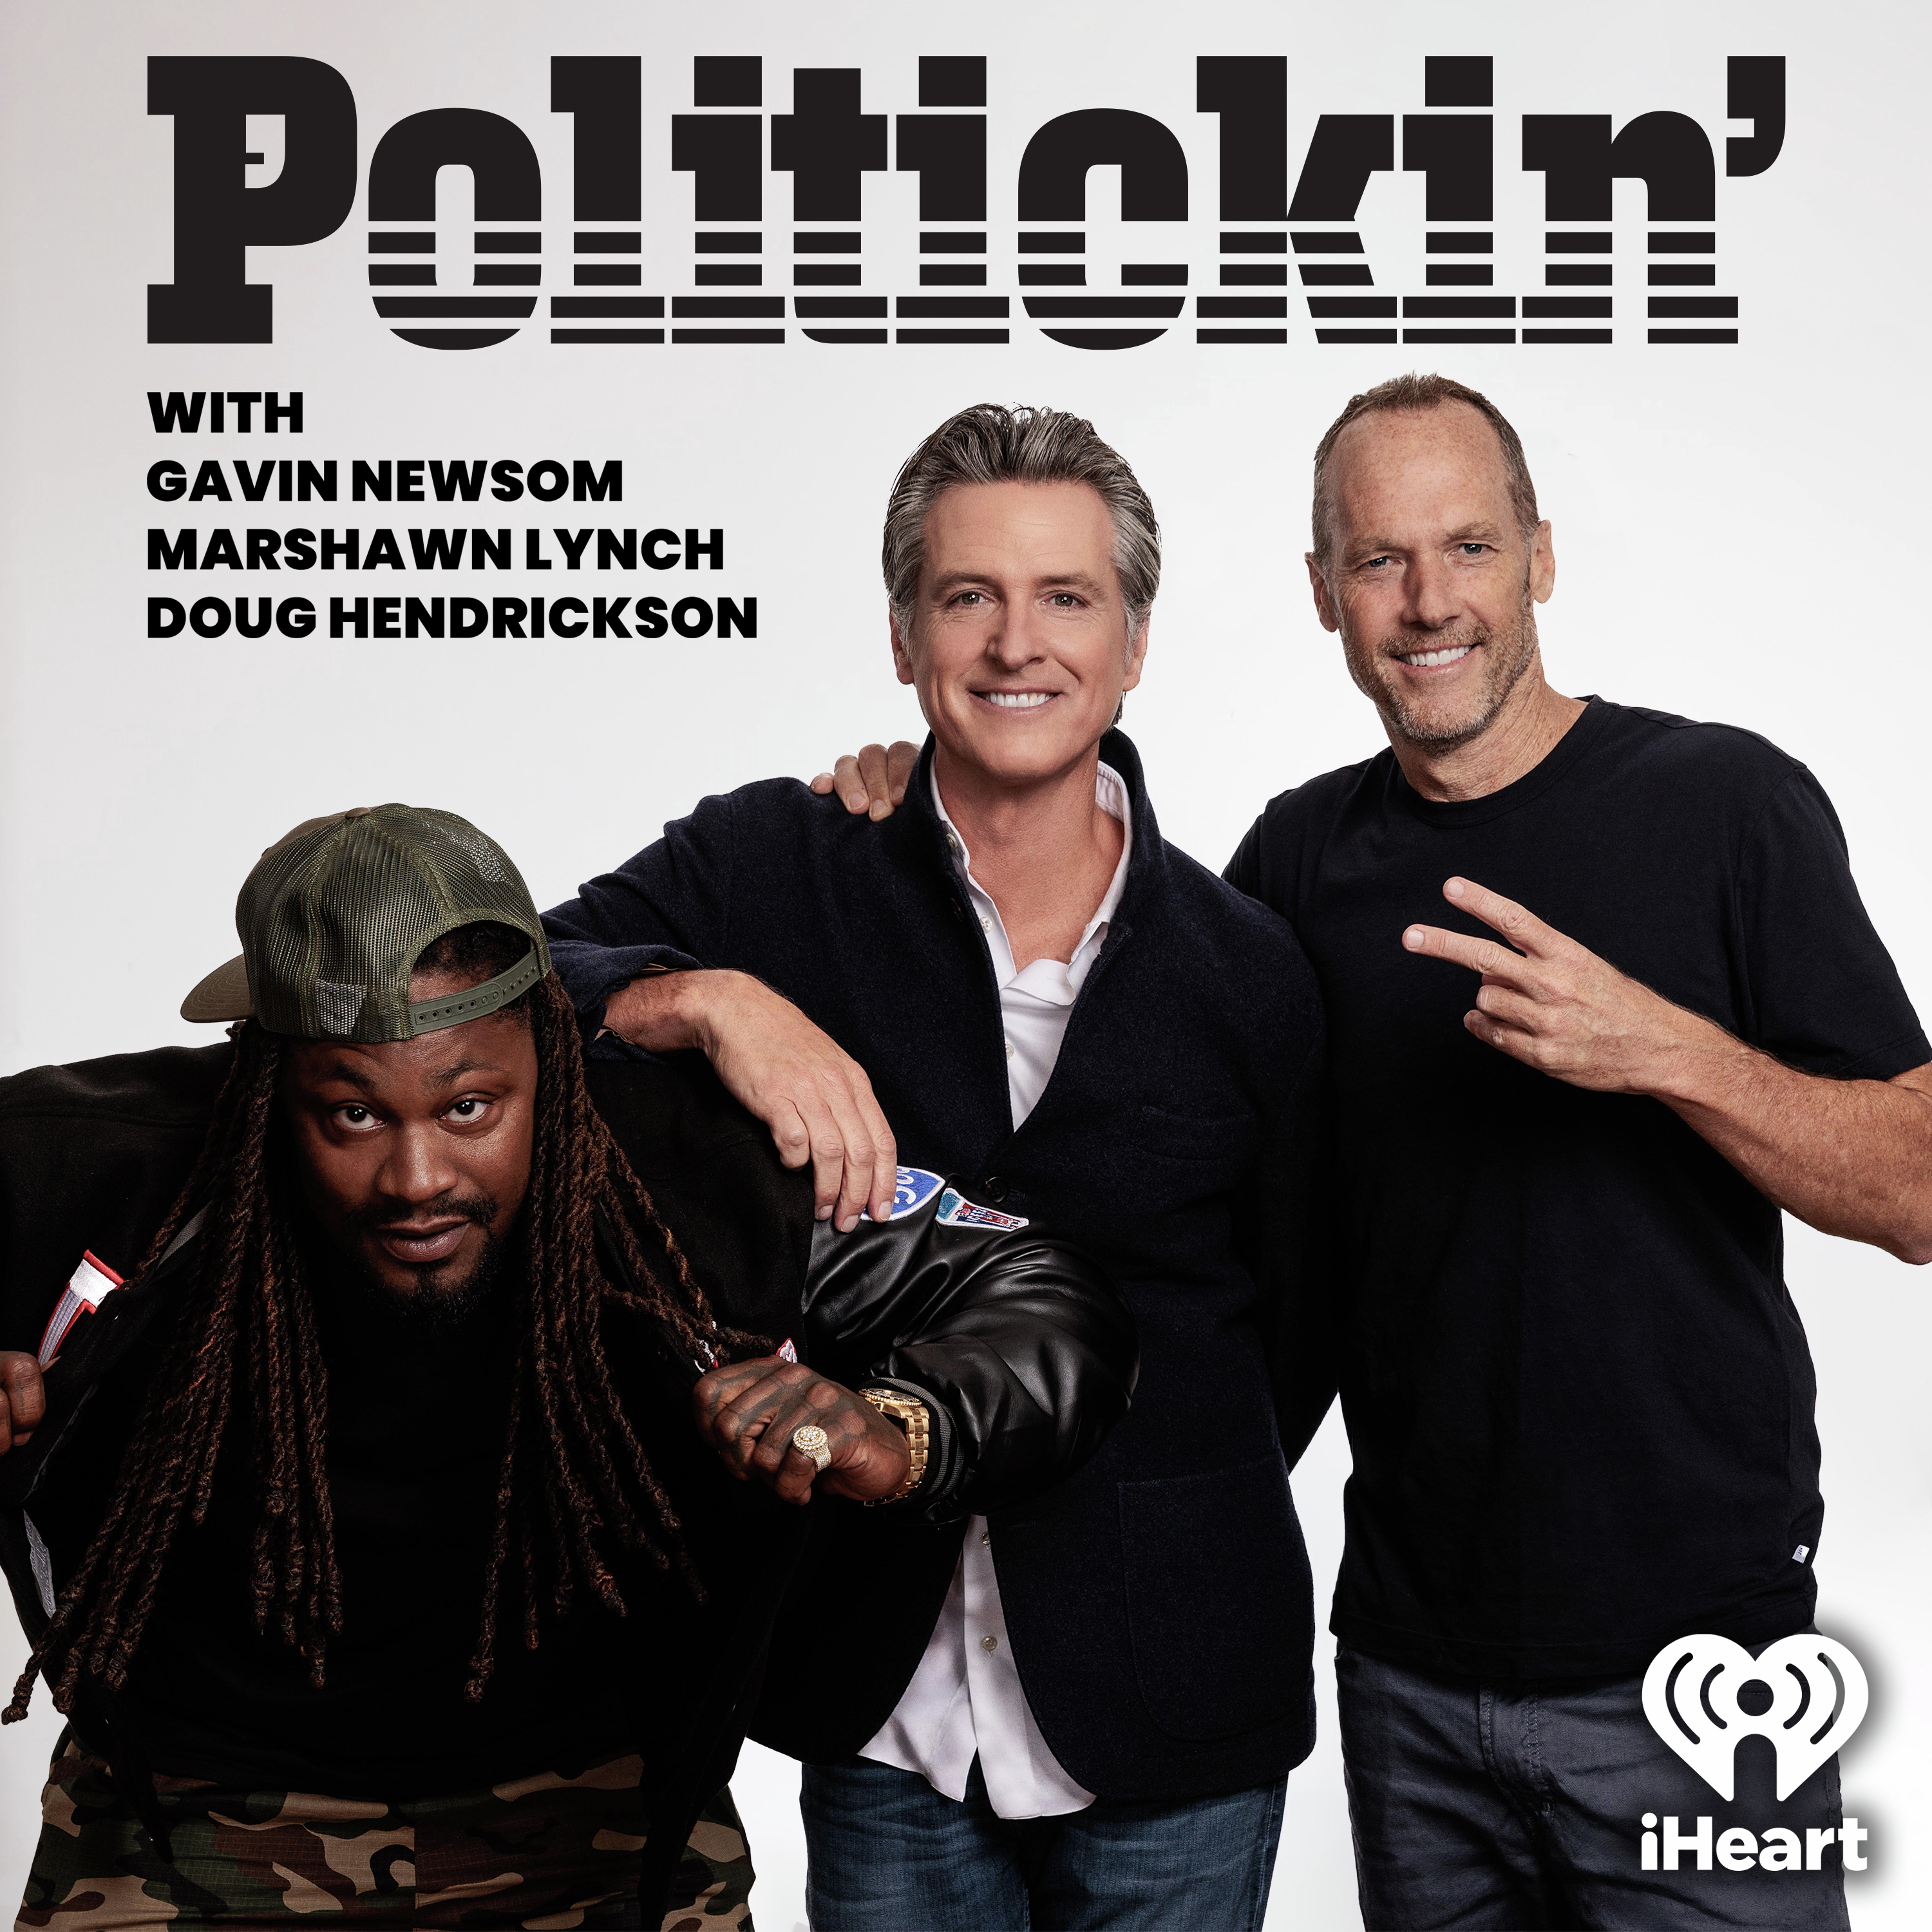 Politickin' with Gavin Newsom, Marshawn Lynch, and Doug Hendrickson